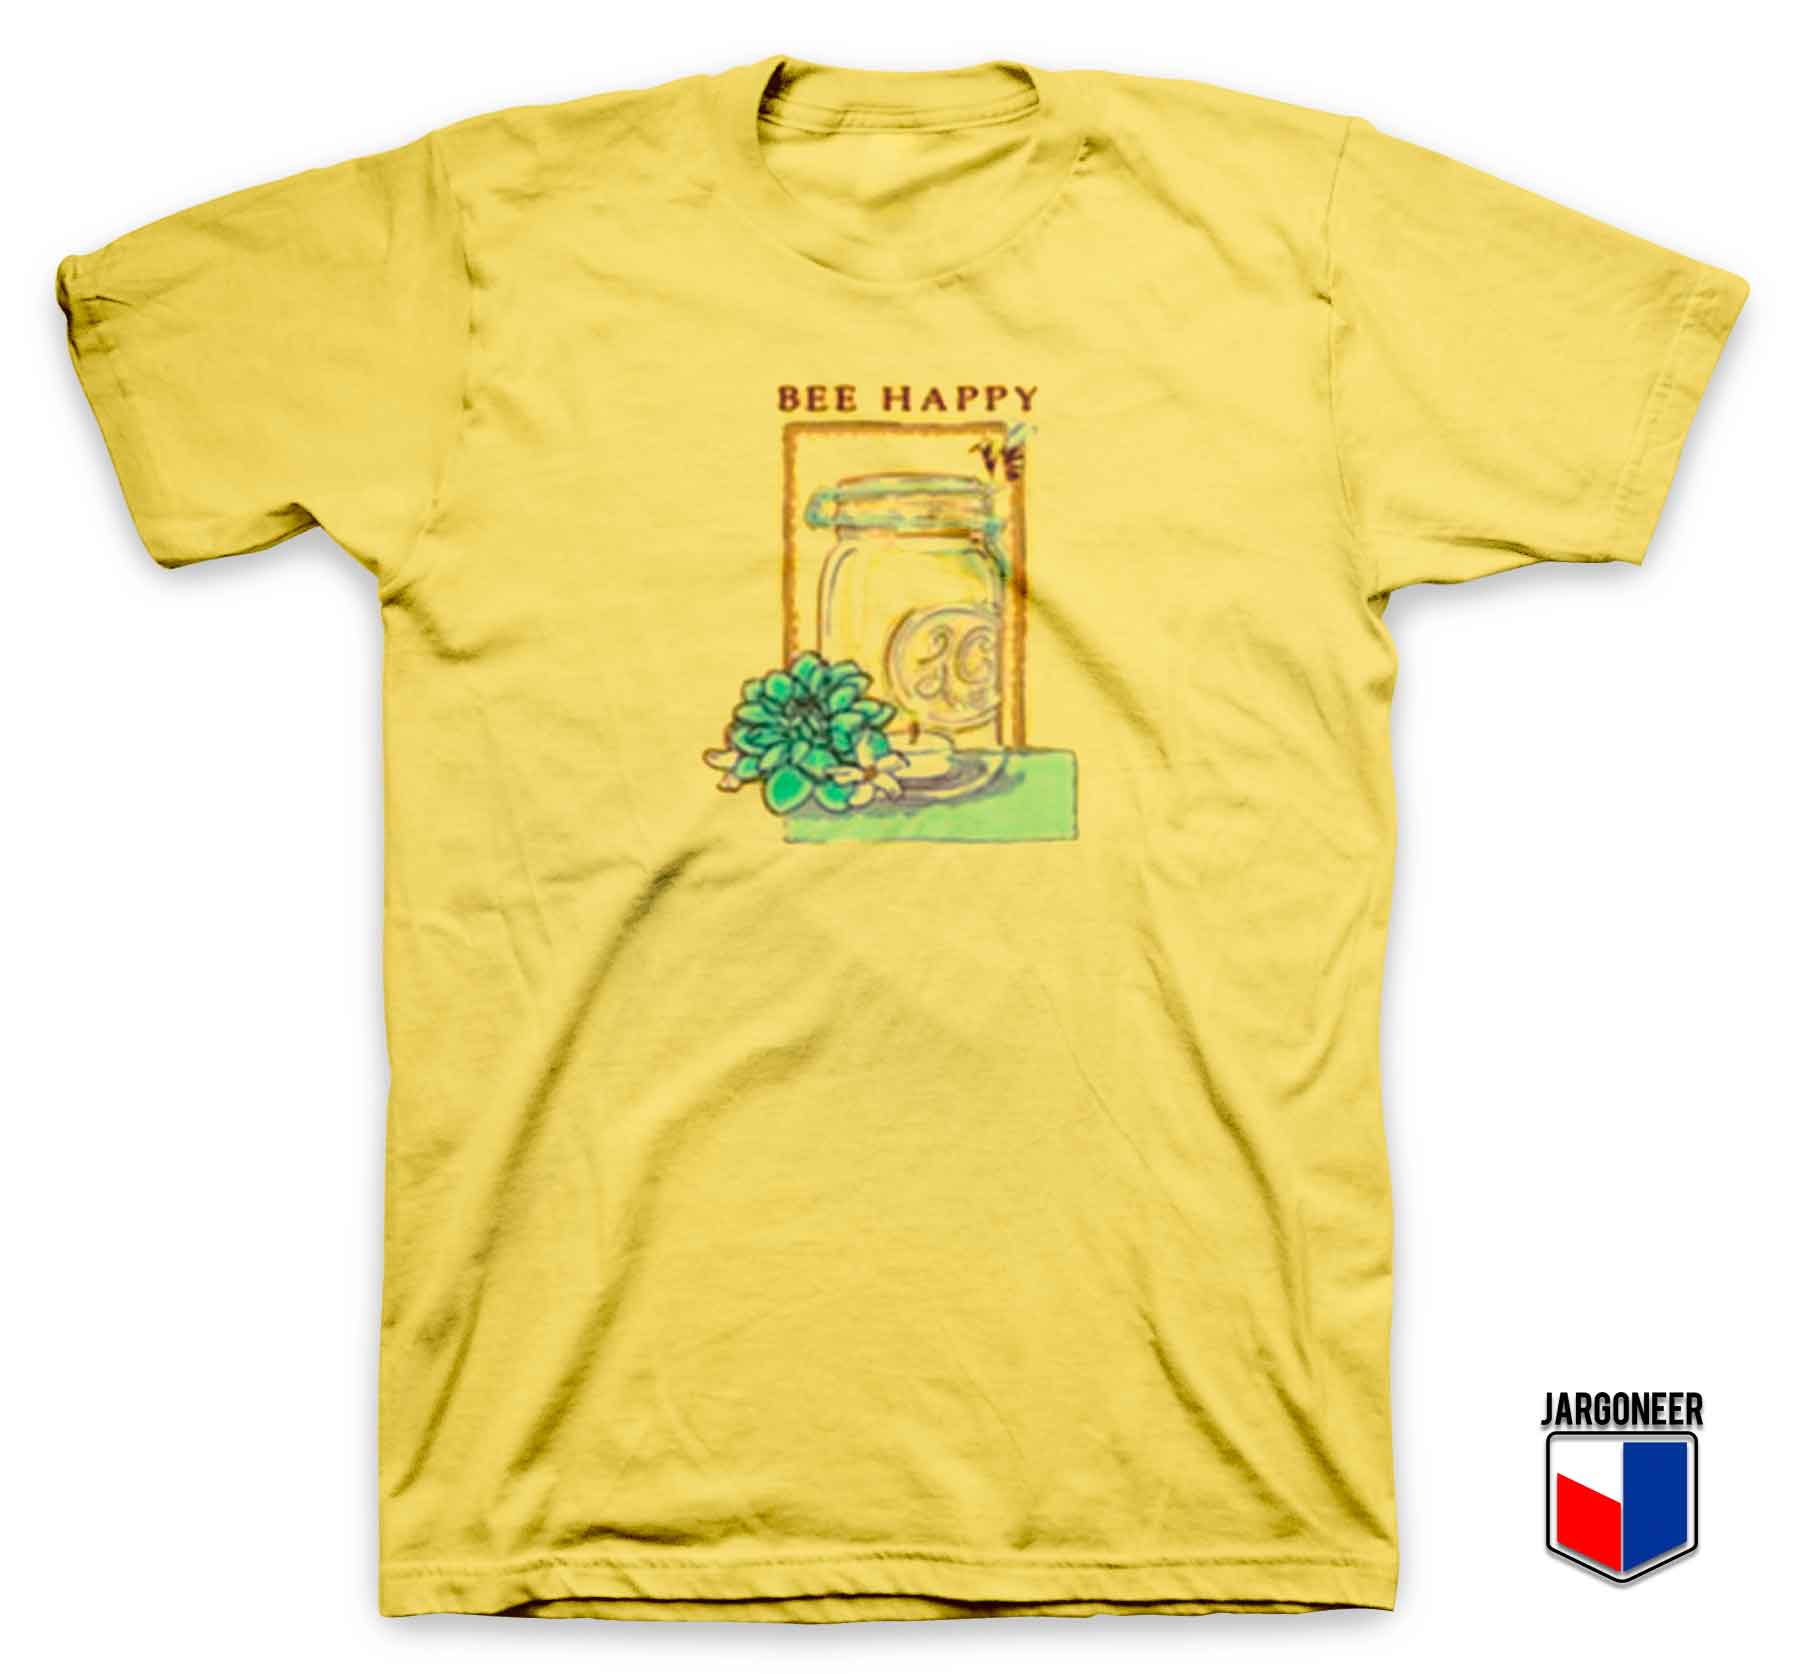 Bee Happy Jar - Shop Unique Graphic Cool Shirt Designs